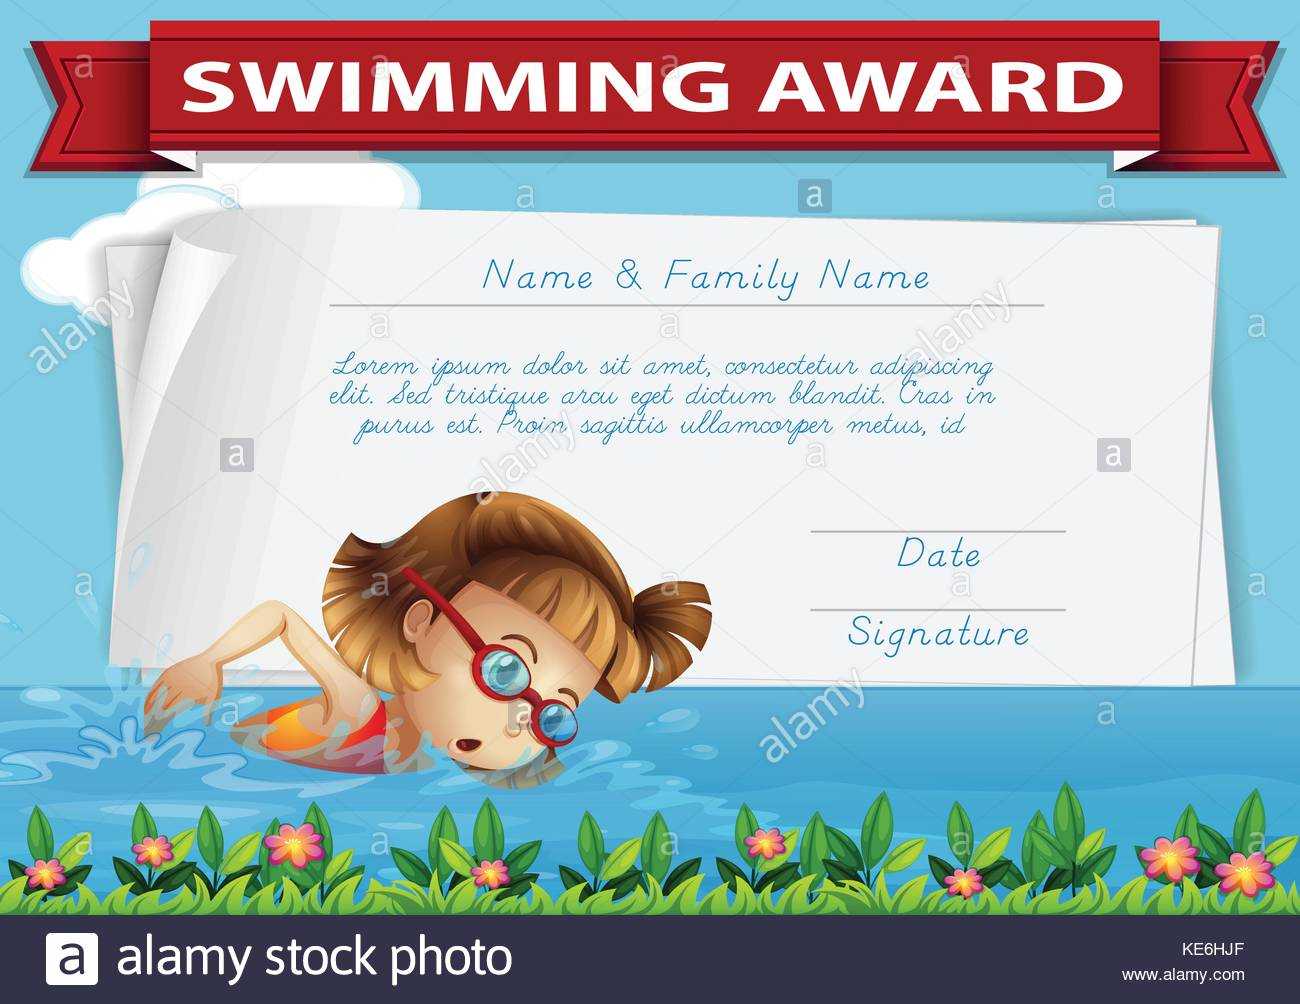 Swimming Award Certificate Template Illustration Stock Within Swimming Award Certificate Template